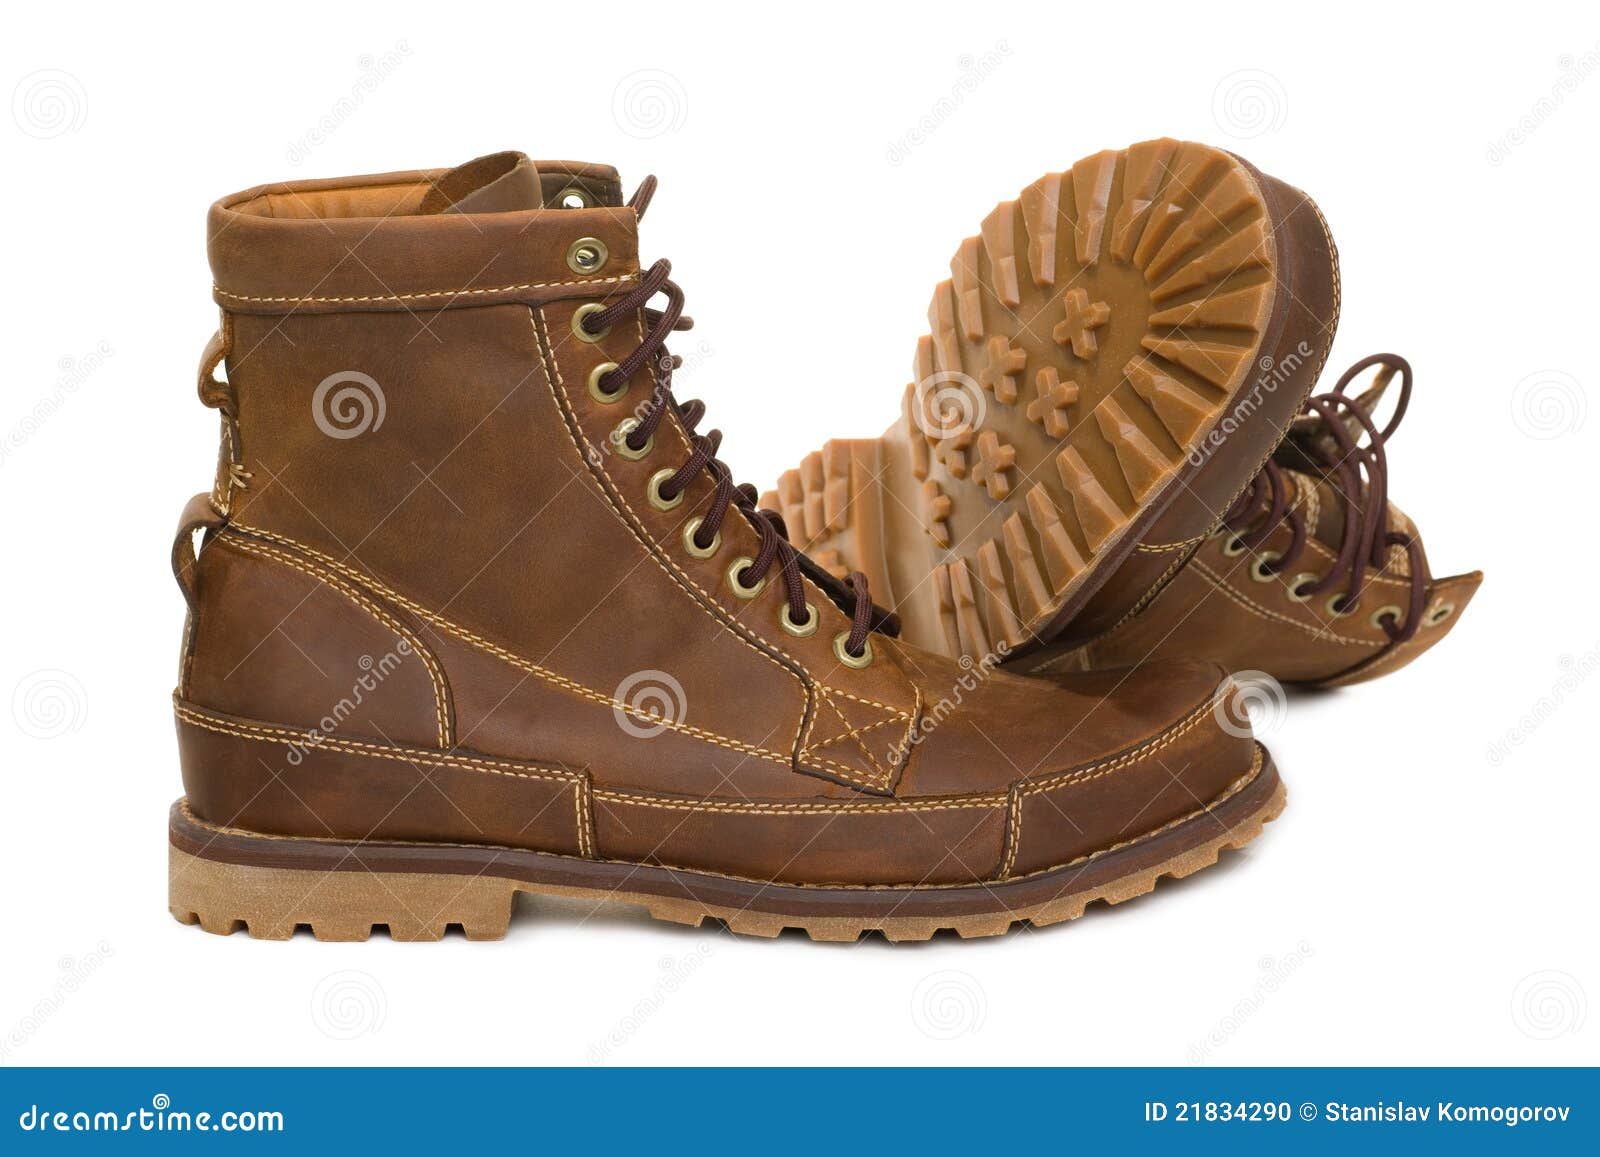 cool mens boots